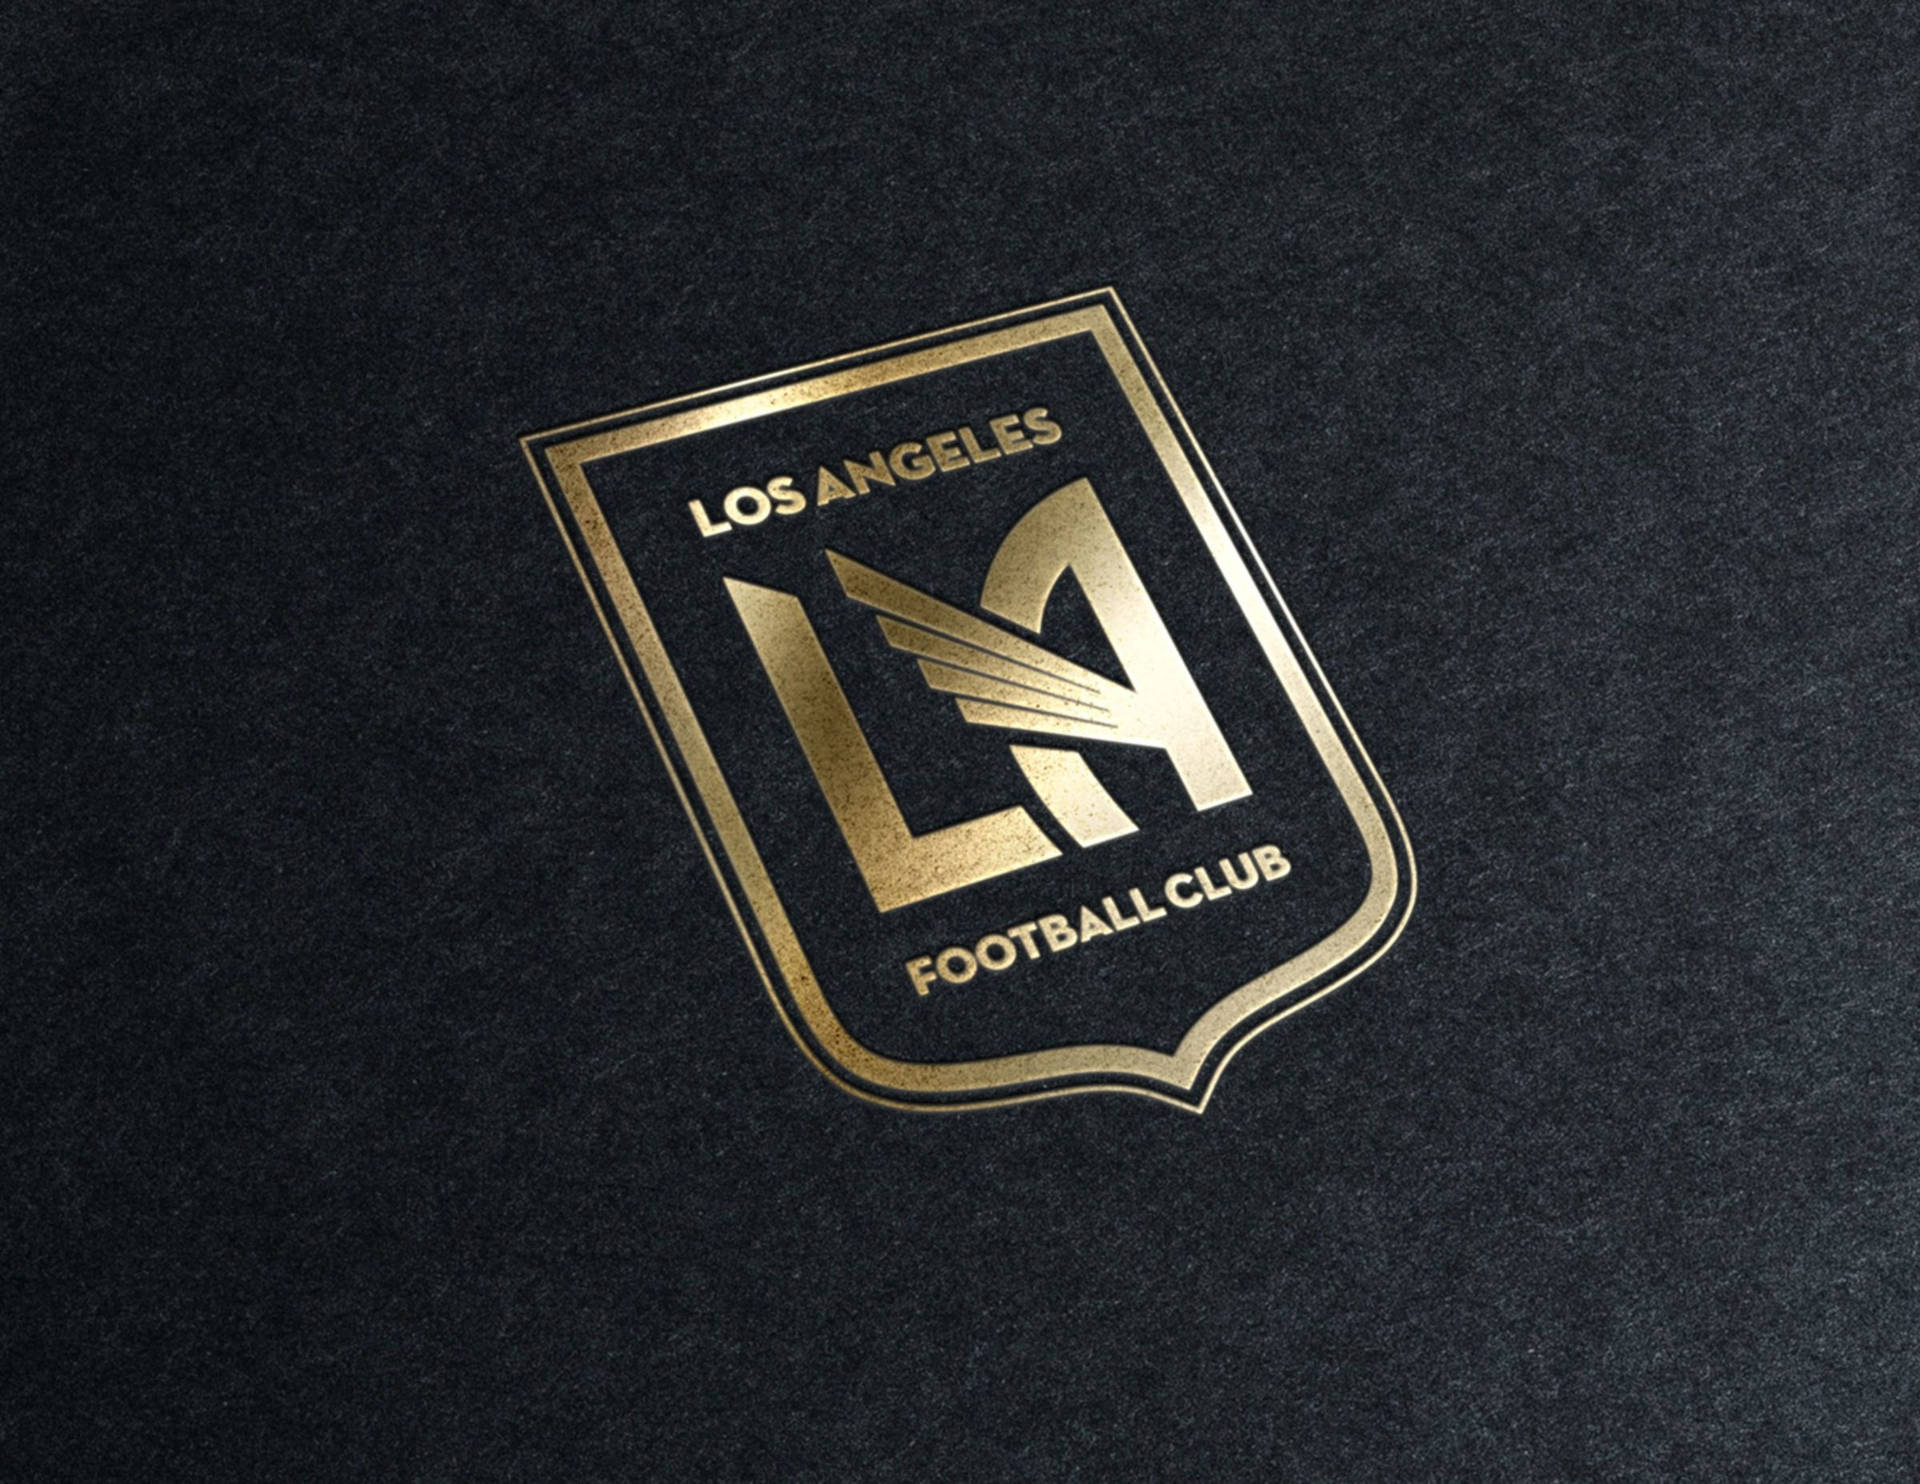 Lafc Gold Logo Embedded On Black Backdrop